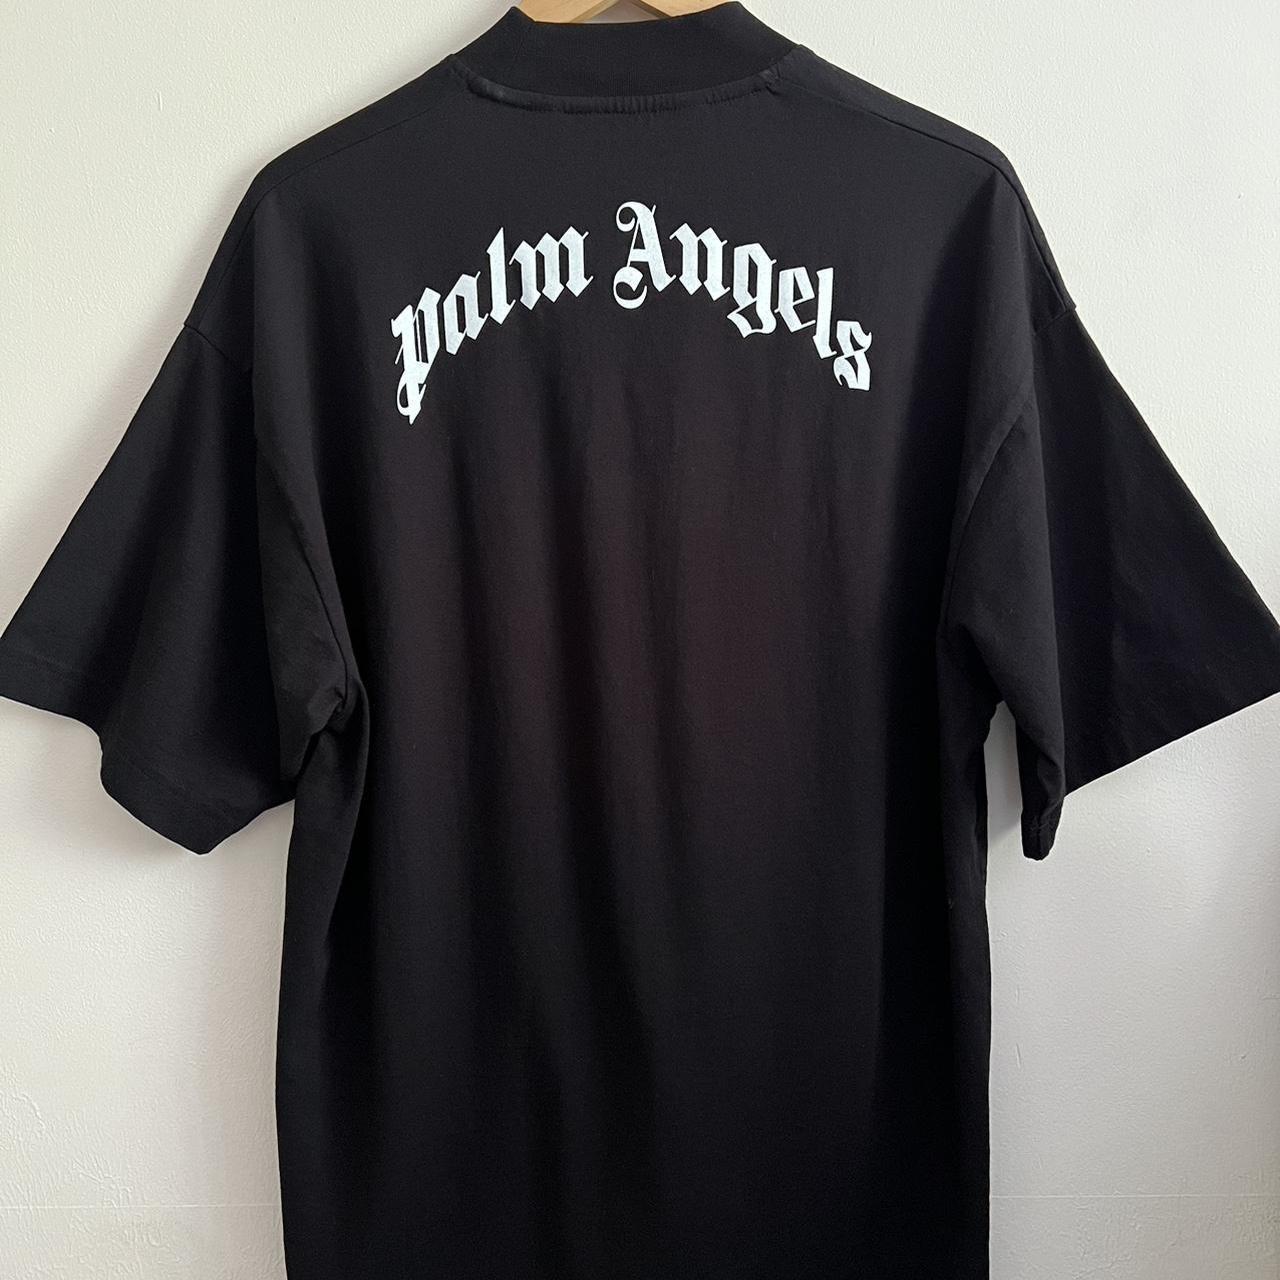 Palm Angels Women's Black T-shirt | Depop